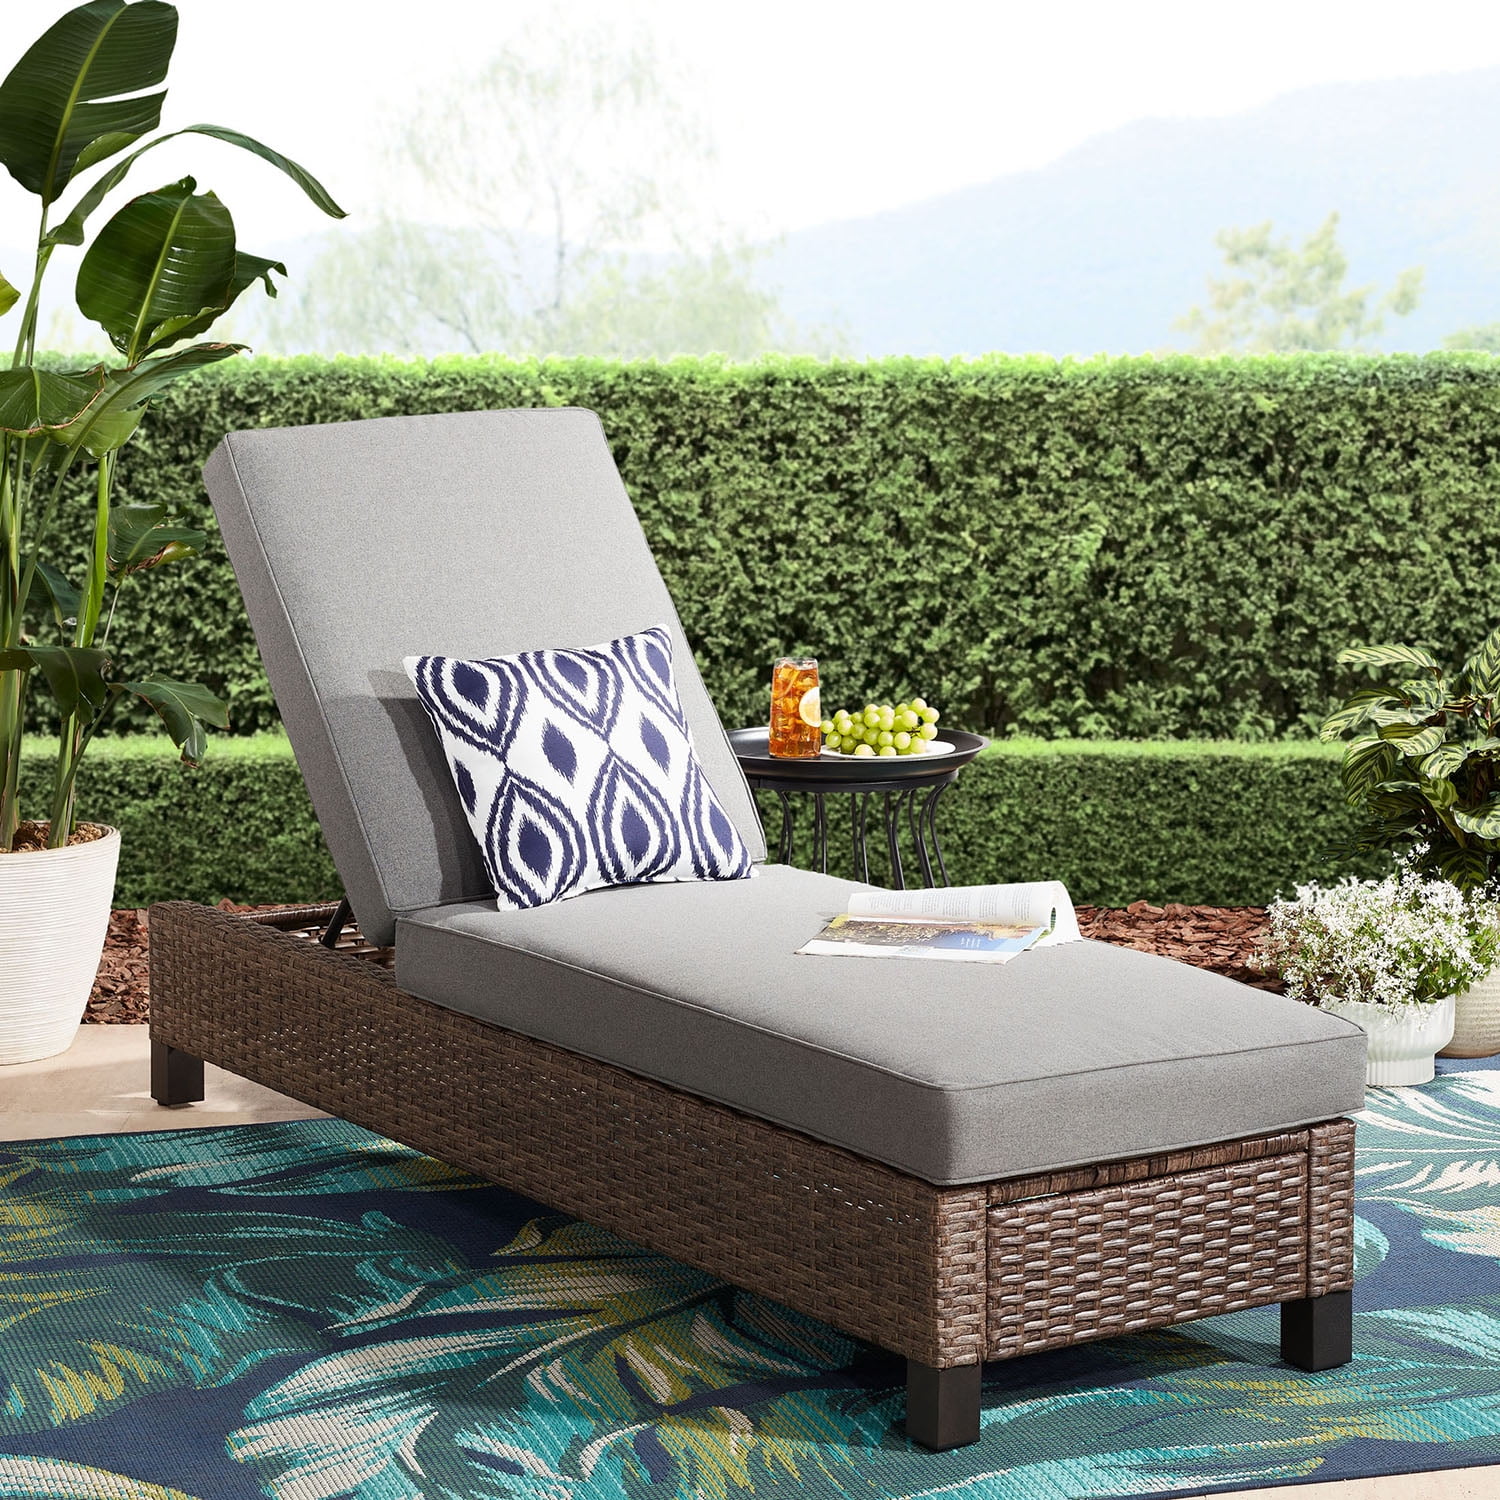 Chaise Lounge Cushion Outdoor Patio Backyard Pool Garden Seat Chair Pillow Pad 